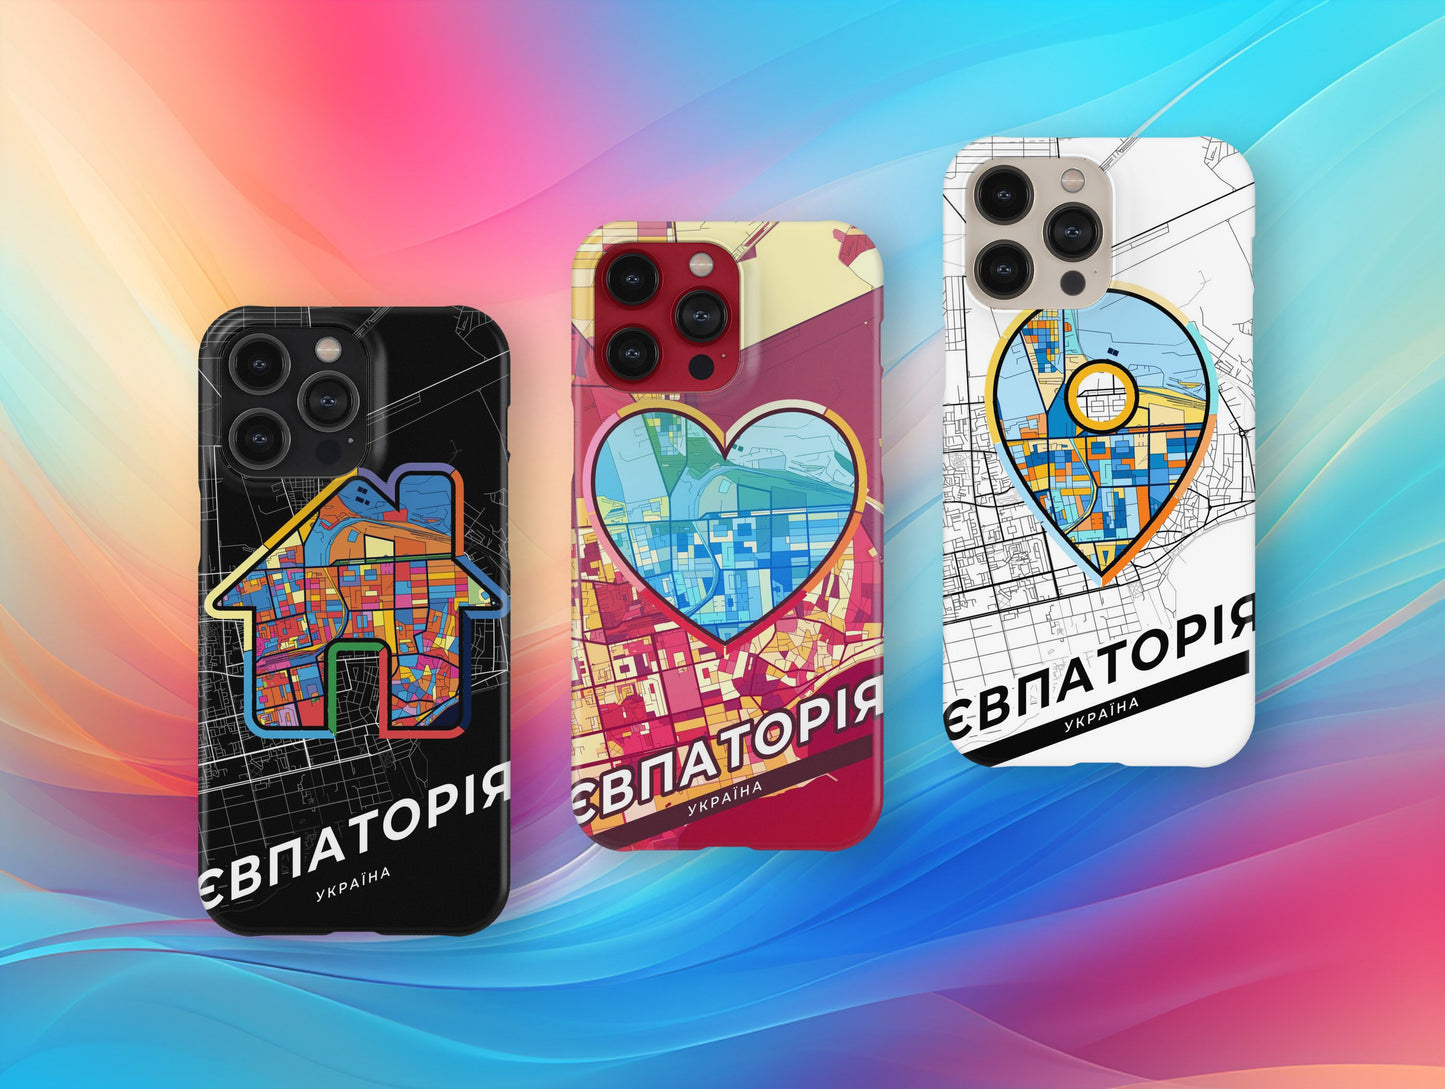 Yevpatoria Ukraine slim phone case with colorful icon